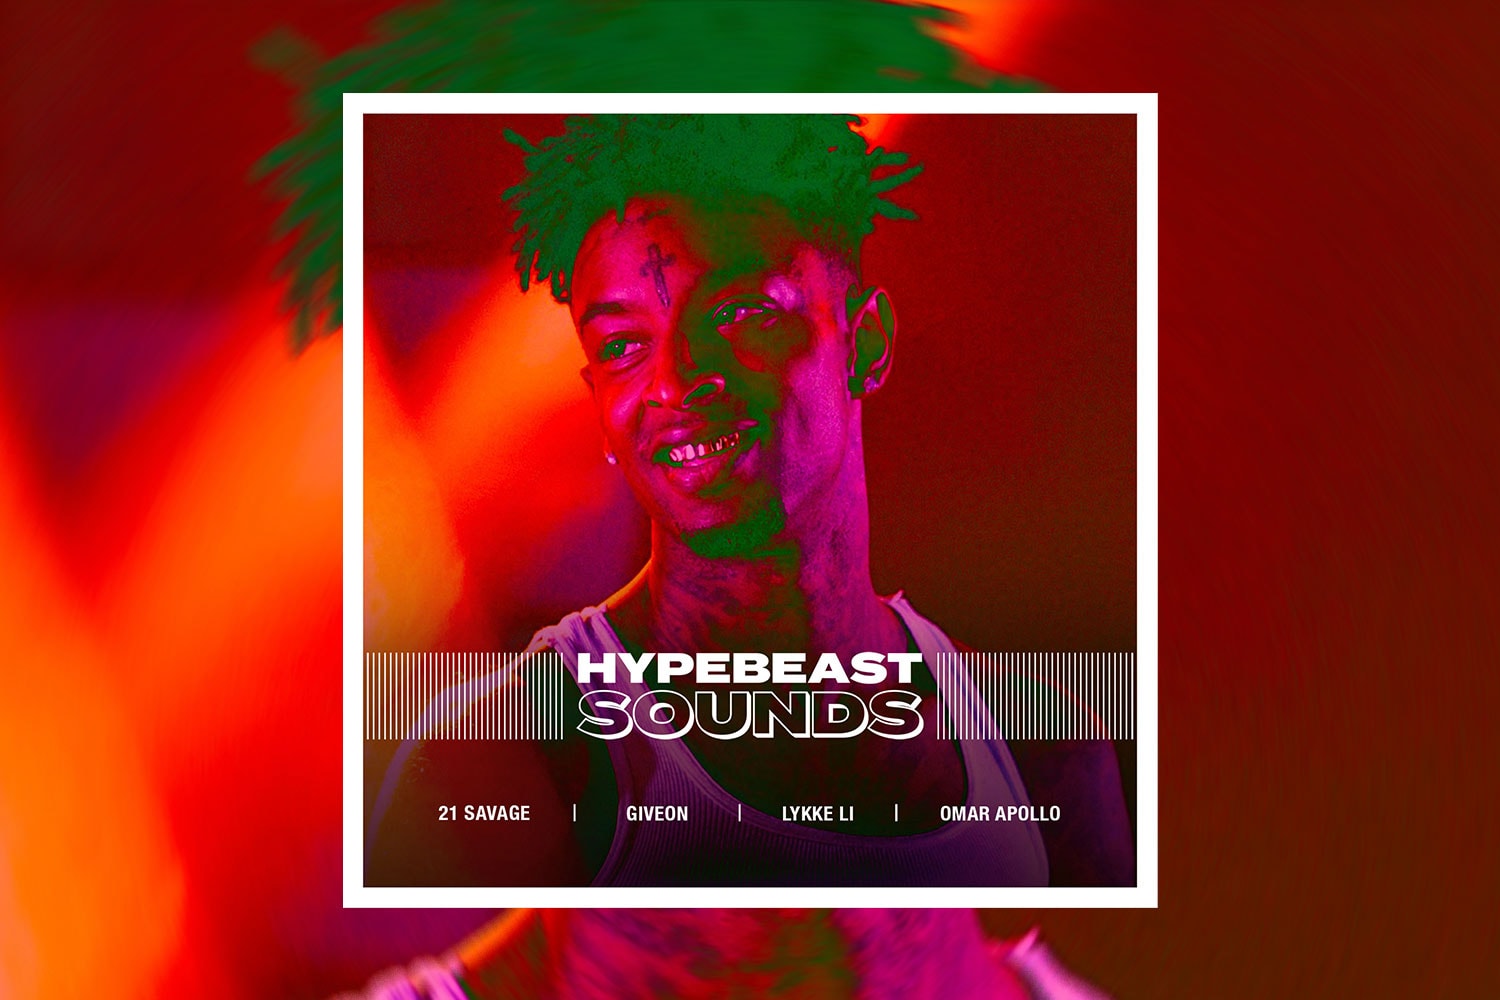 HYPEBEAST Sounds Playlist Spotify 21 Savage Lykke Li Giveon Omar Apollo Best New Tracks HipHop Rap Rapper Indie Alt Listen Stream